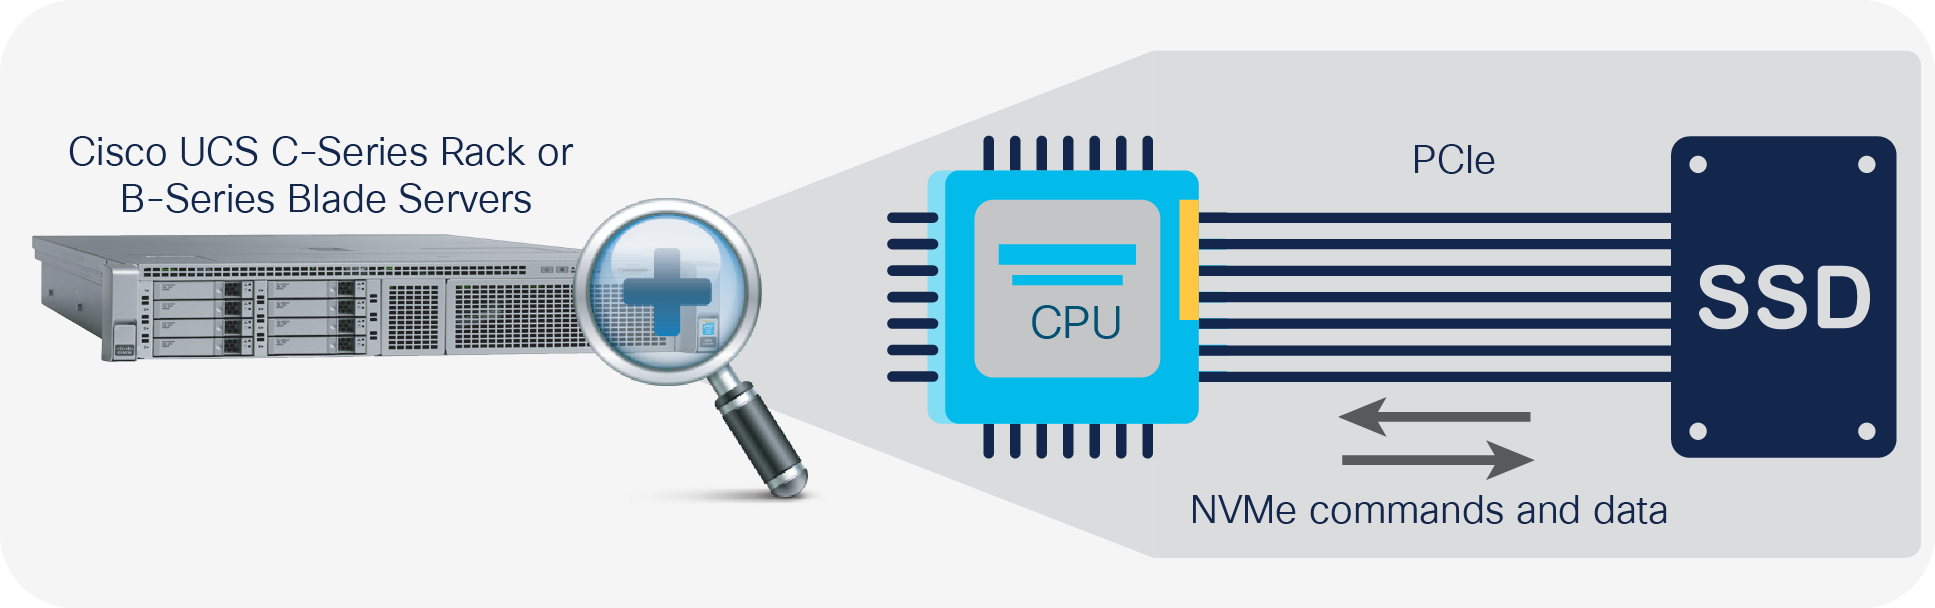 NVMe Storage for Cisco UCS C-Series Rack and B-Series Blade Servers